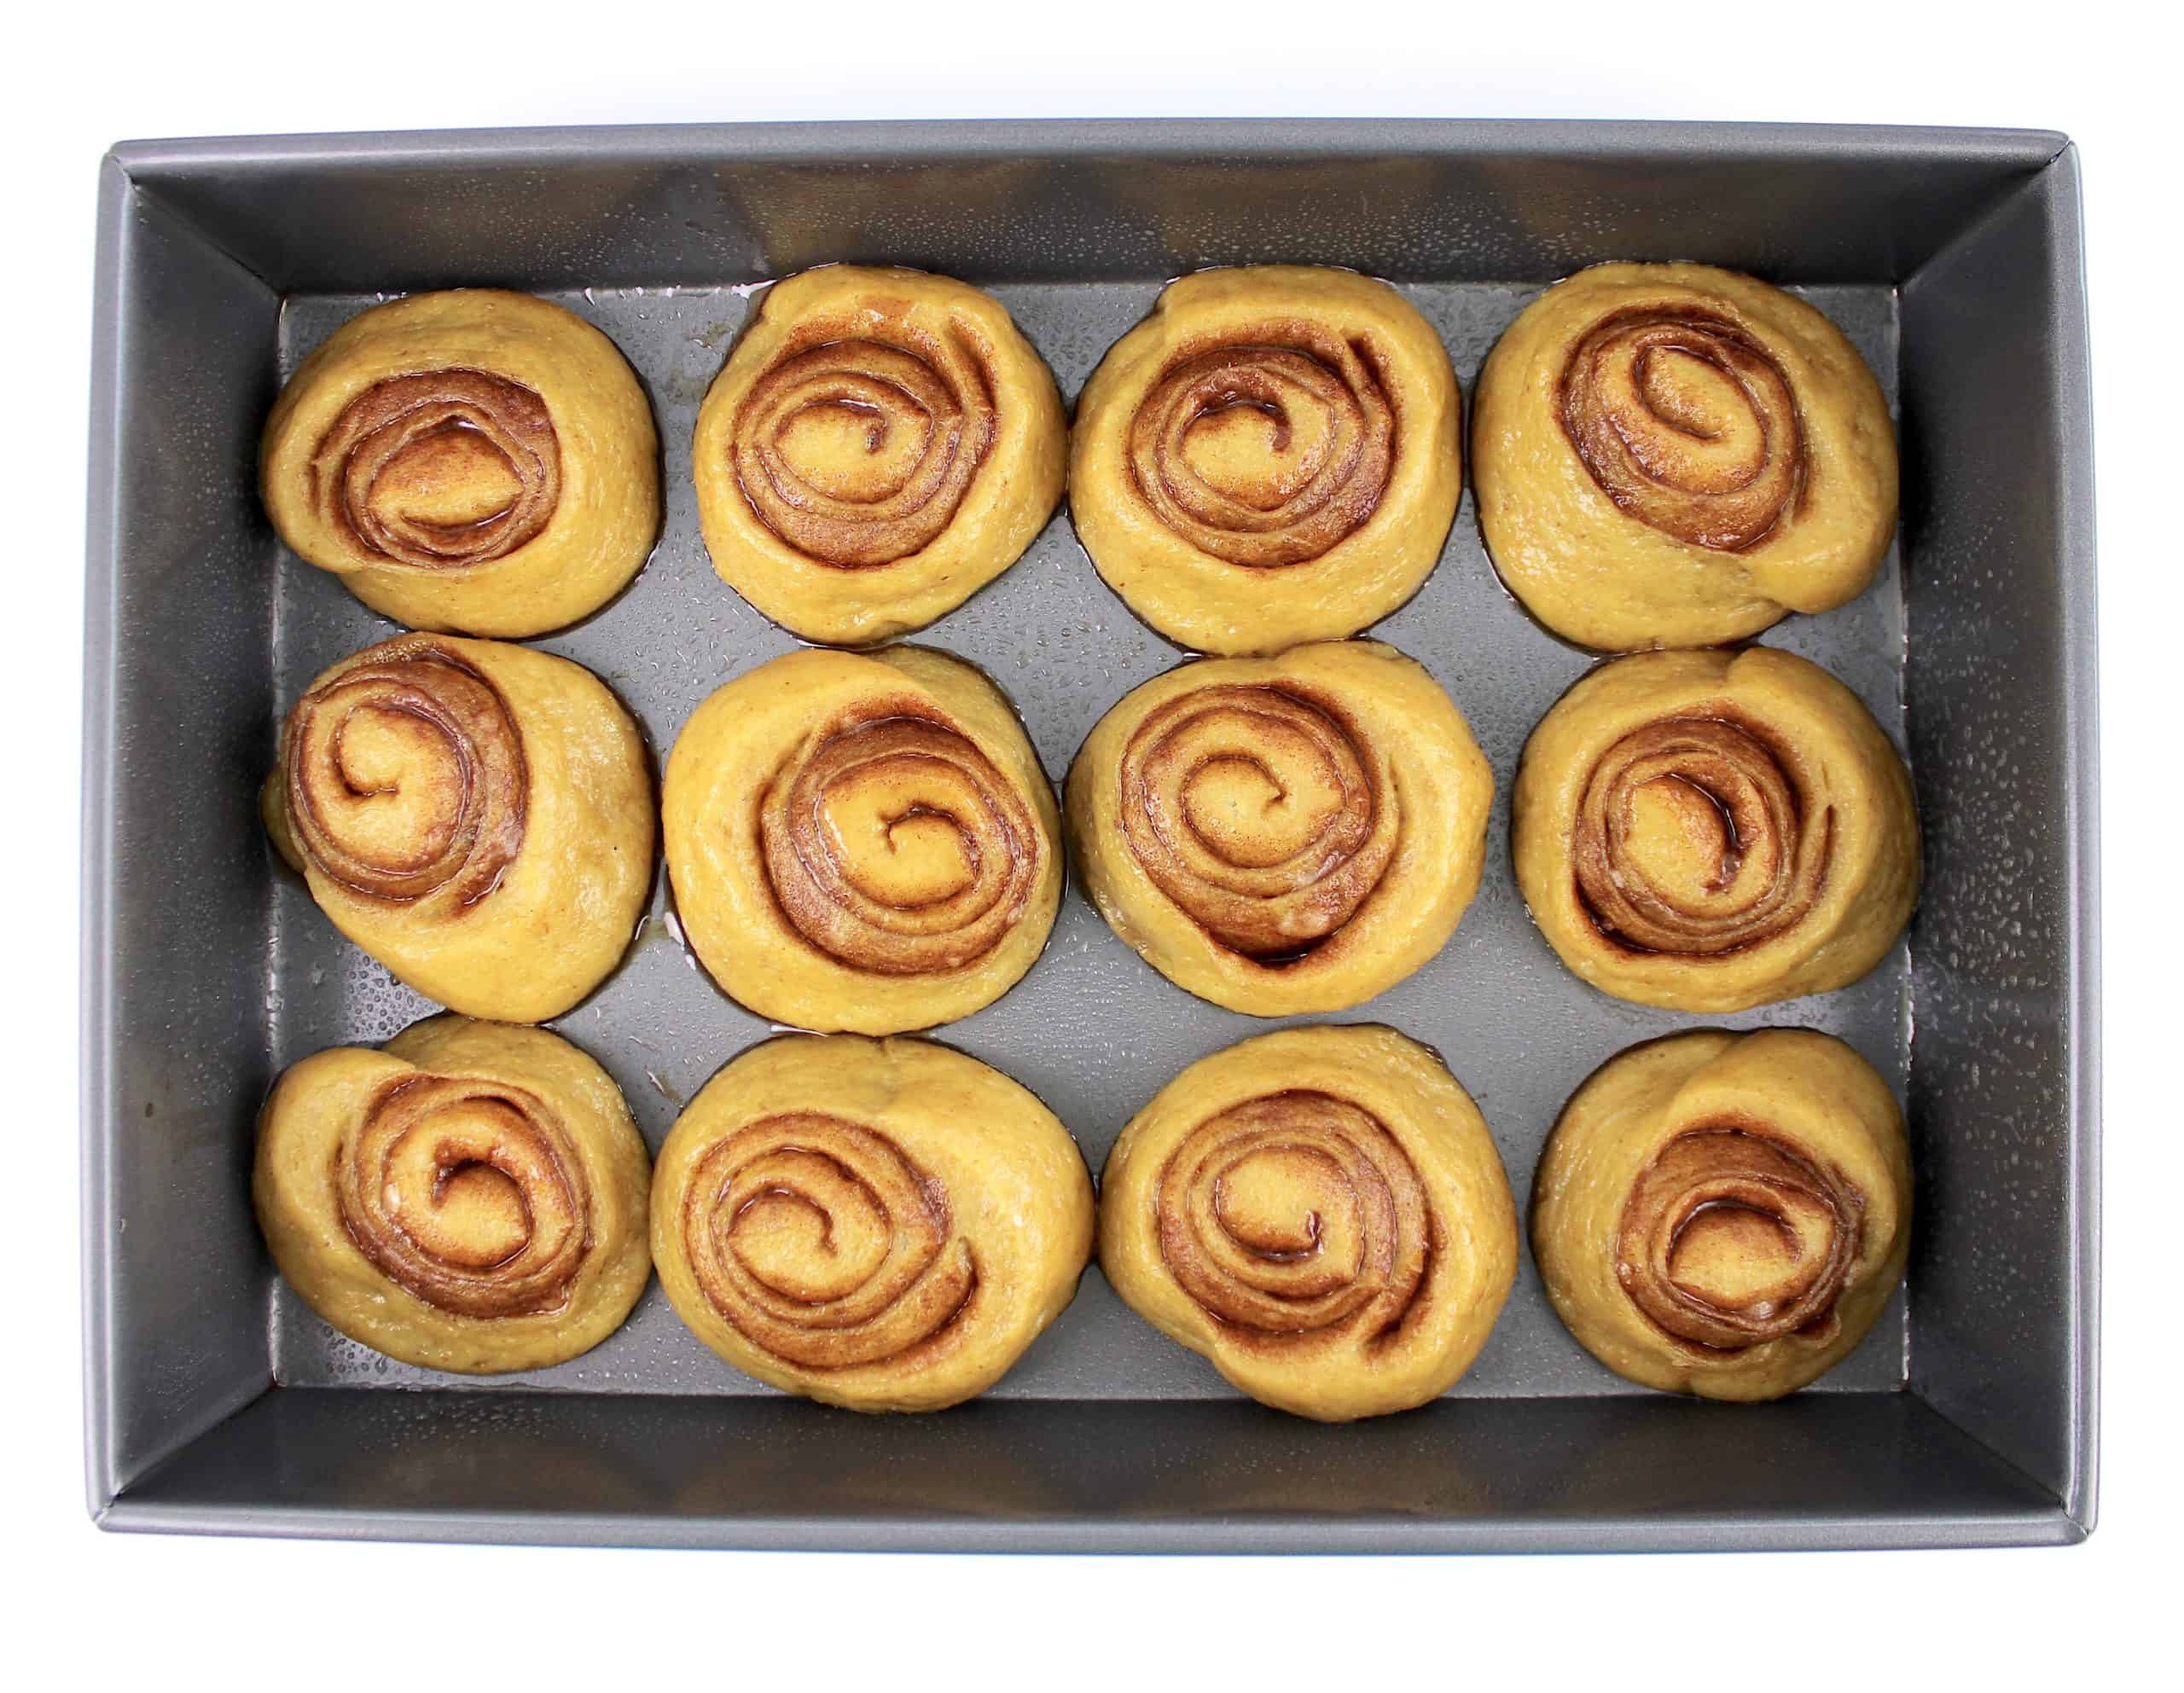 proof cinnamon rolls in baking pan unbaked